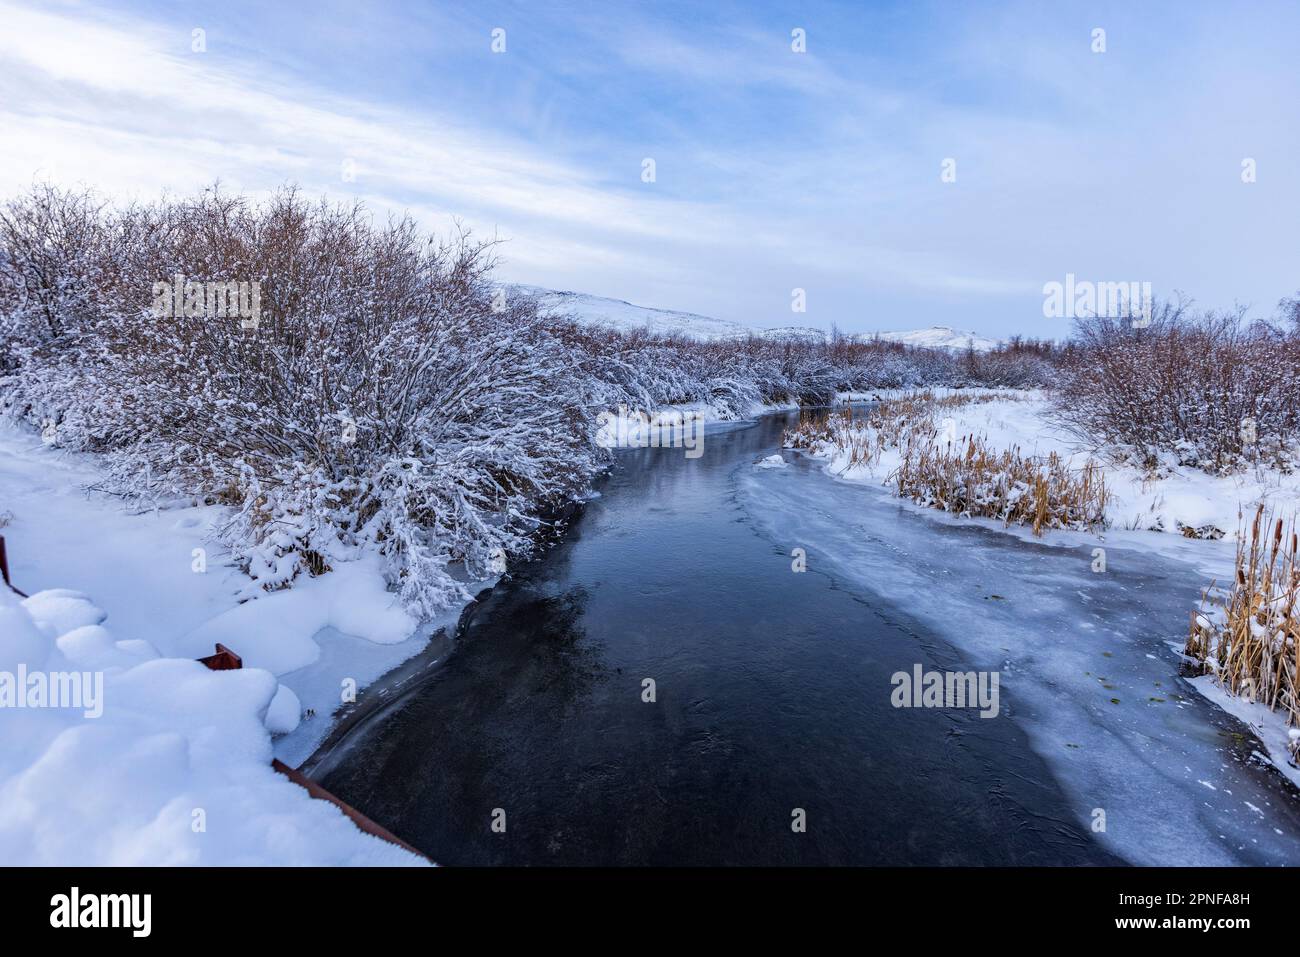 Stati Uniti, Idaho, Bellevue, Icy primavera torrente in inverno Foto Stock